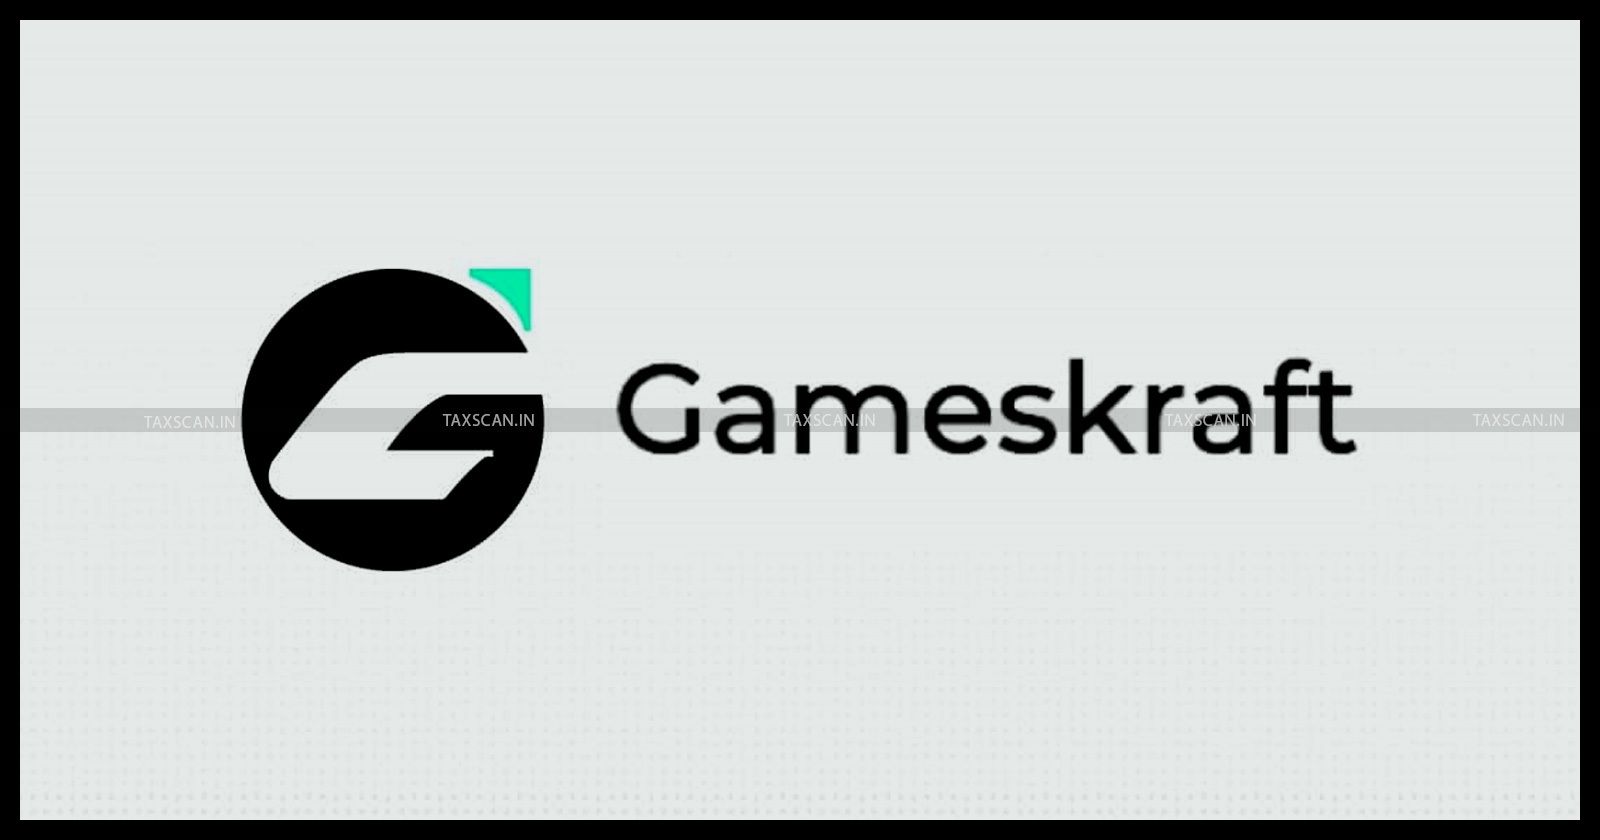 Karnataka High Court on Gameskraft - Gameskraft Supreme Court case - DGGI vs Gameskraft - Gameskraft - taxscan